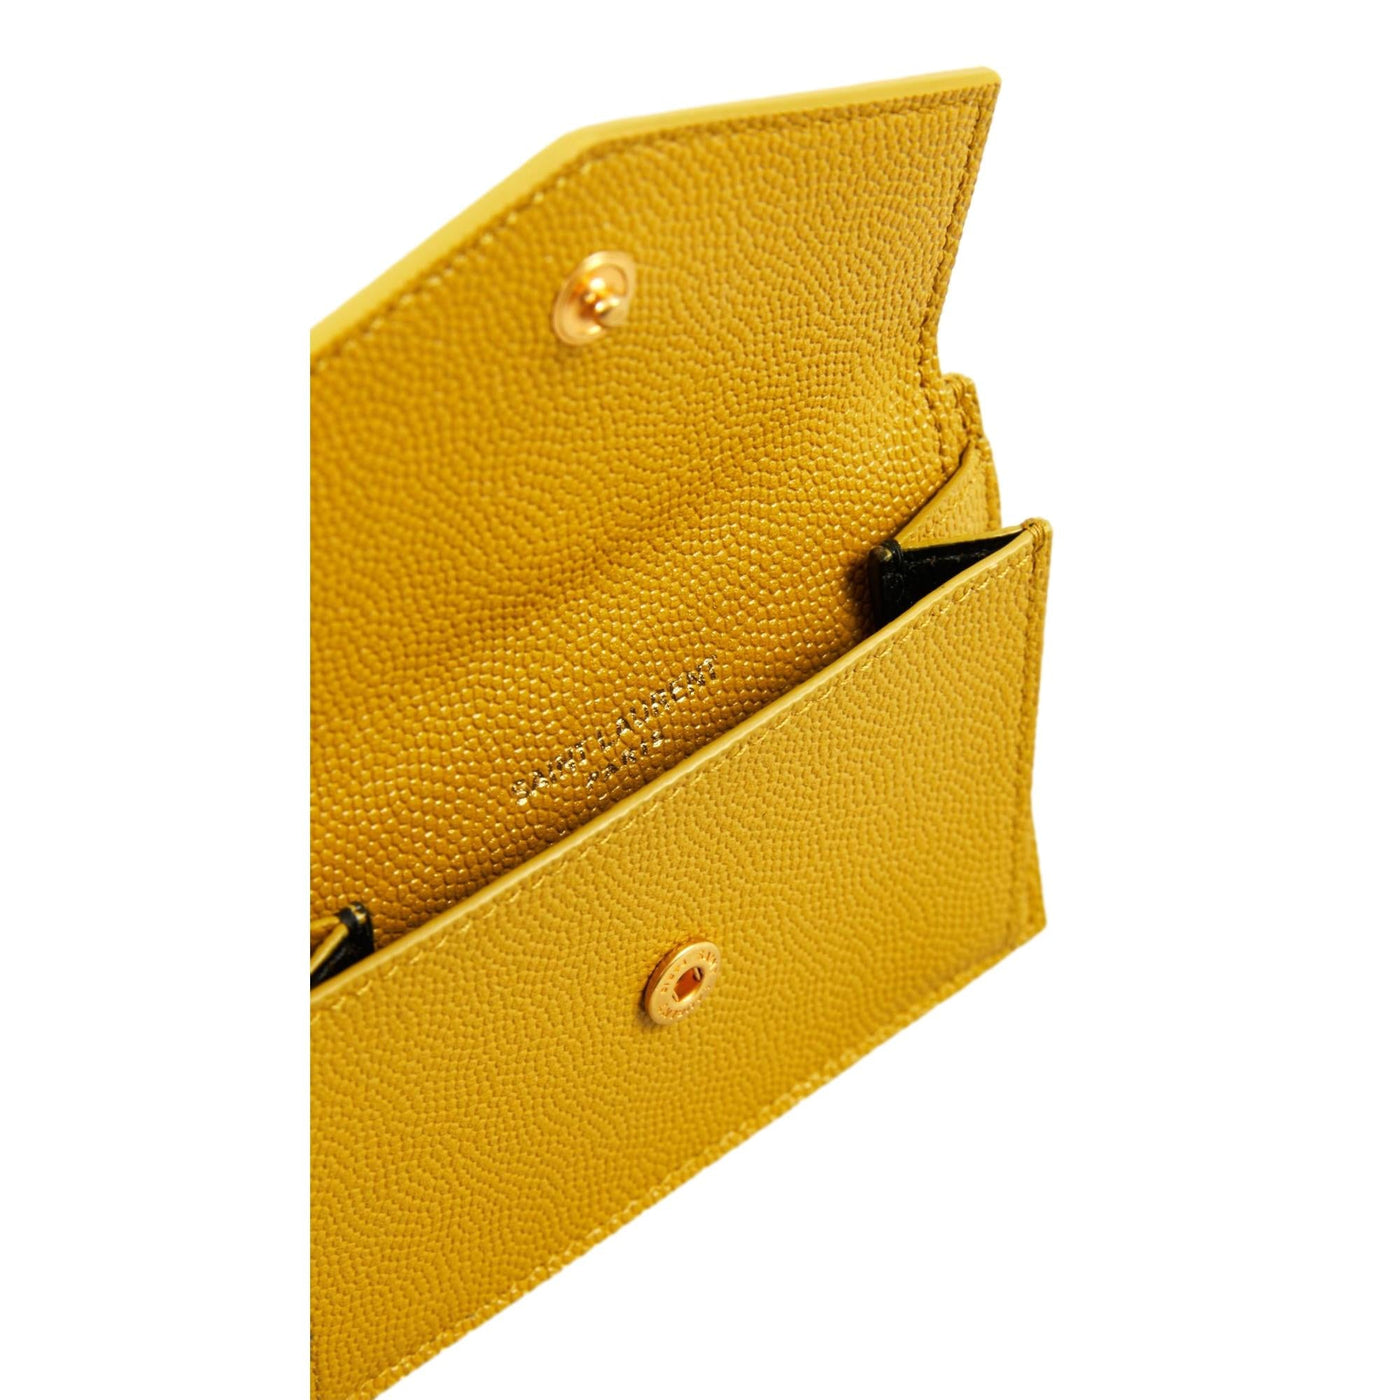 Saint Laurent Uptown Yellow Grain Leather Card Holder 582305 - LUXURYMRKT